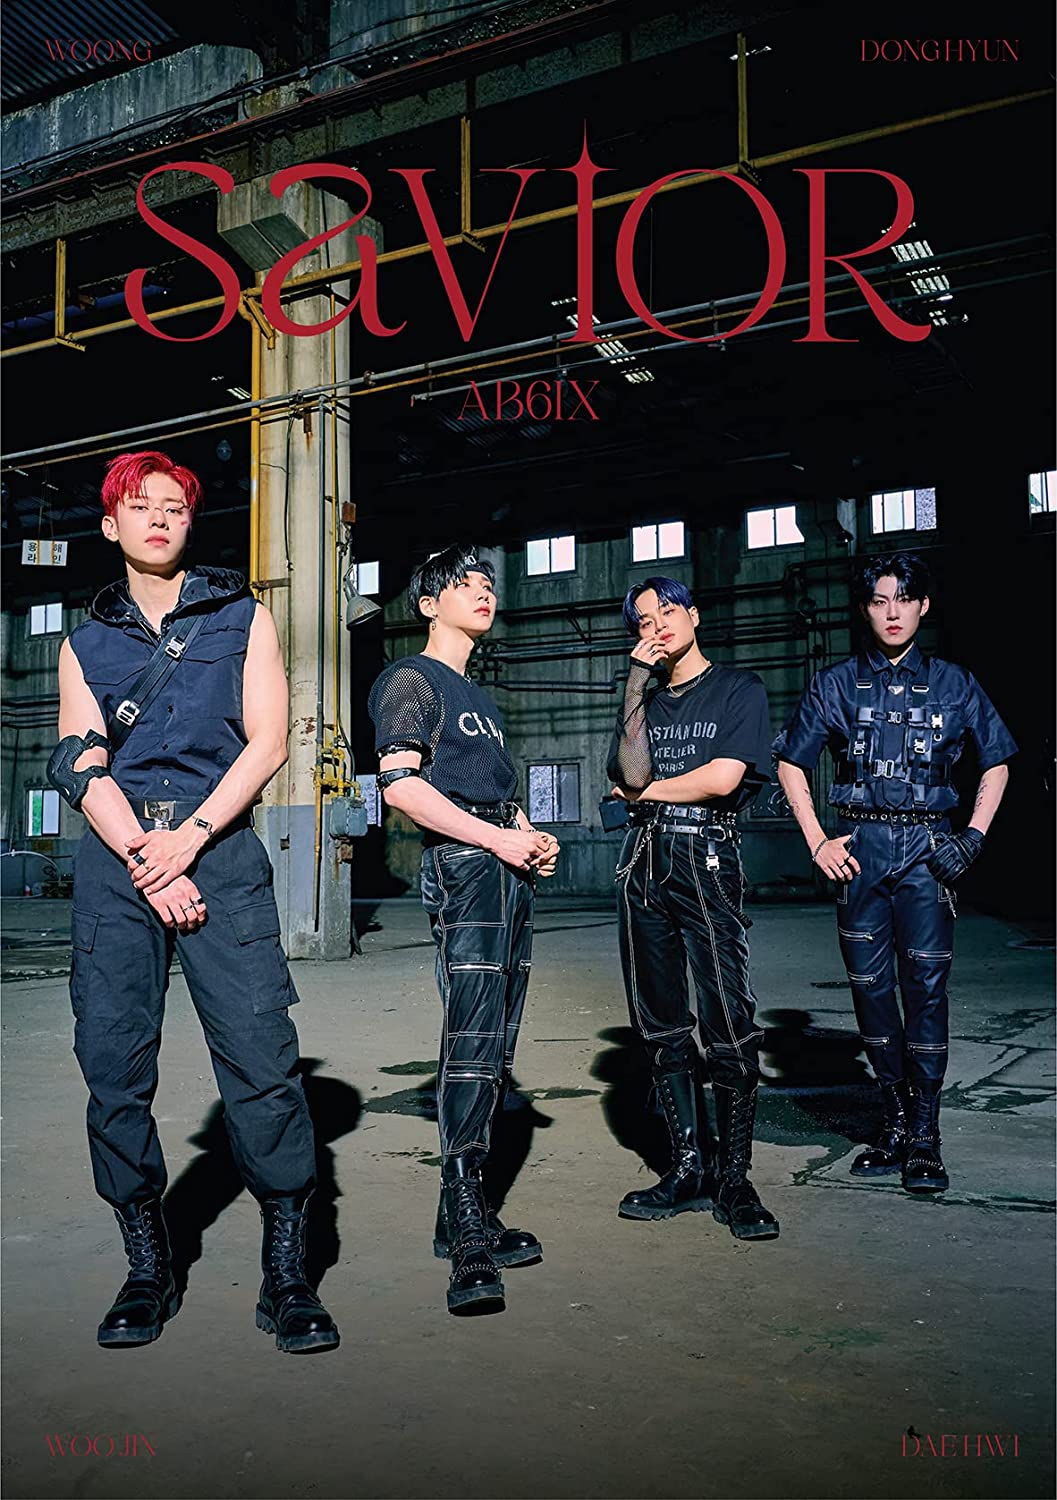 AB6IX: Savior - Limited Edition - incl. DVD